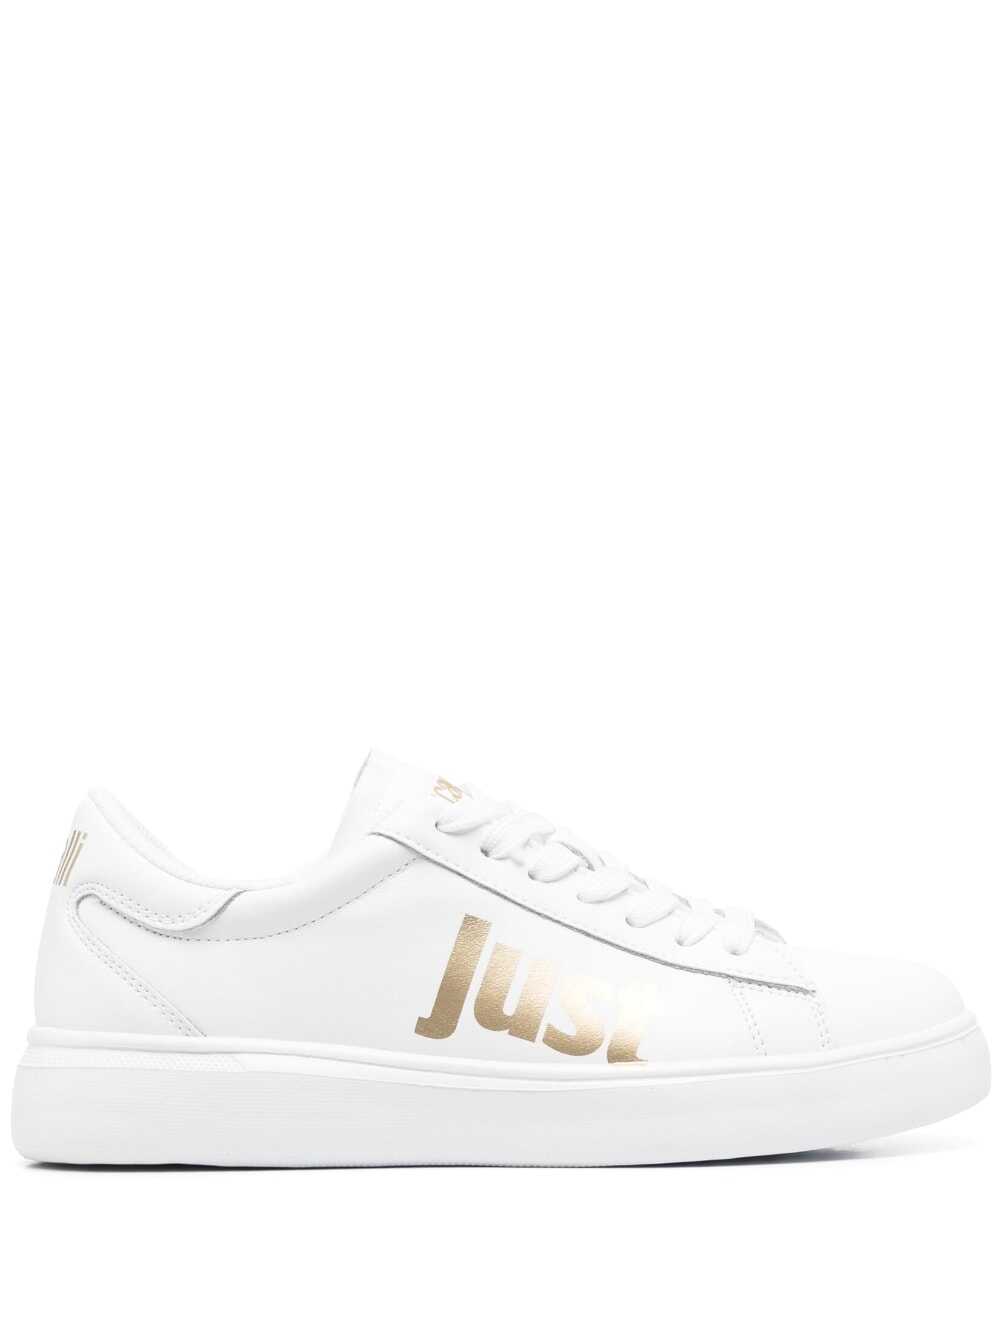 Just Cavalli Sneakers White White